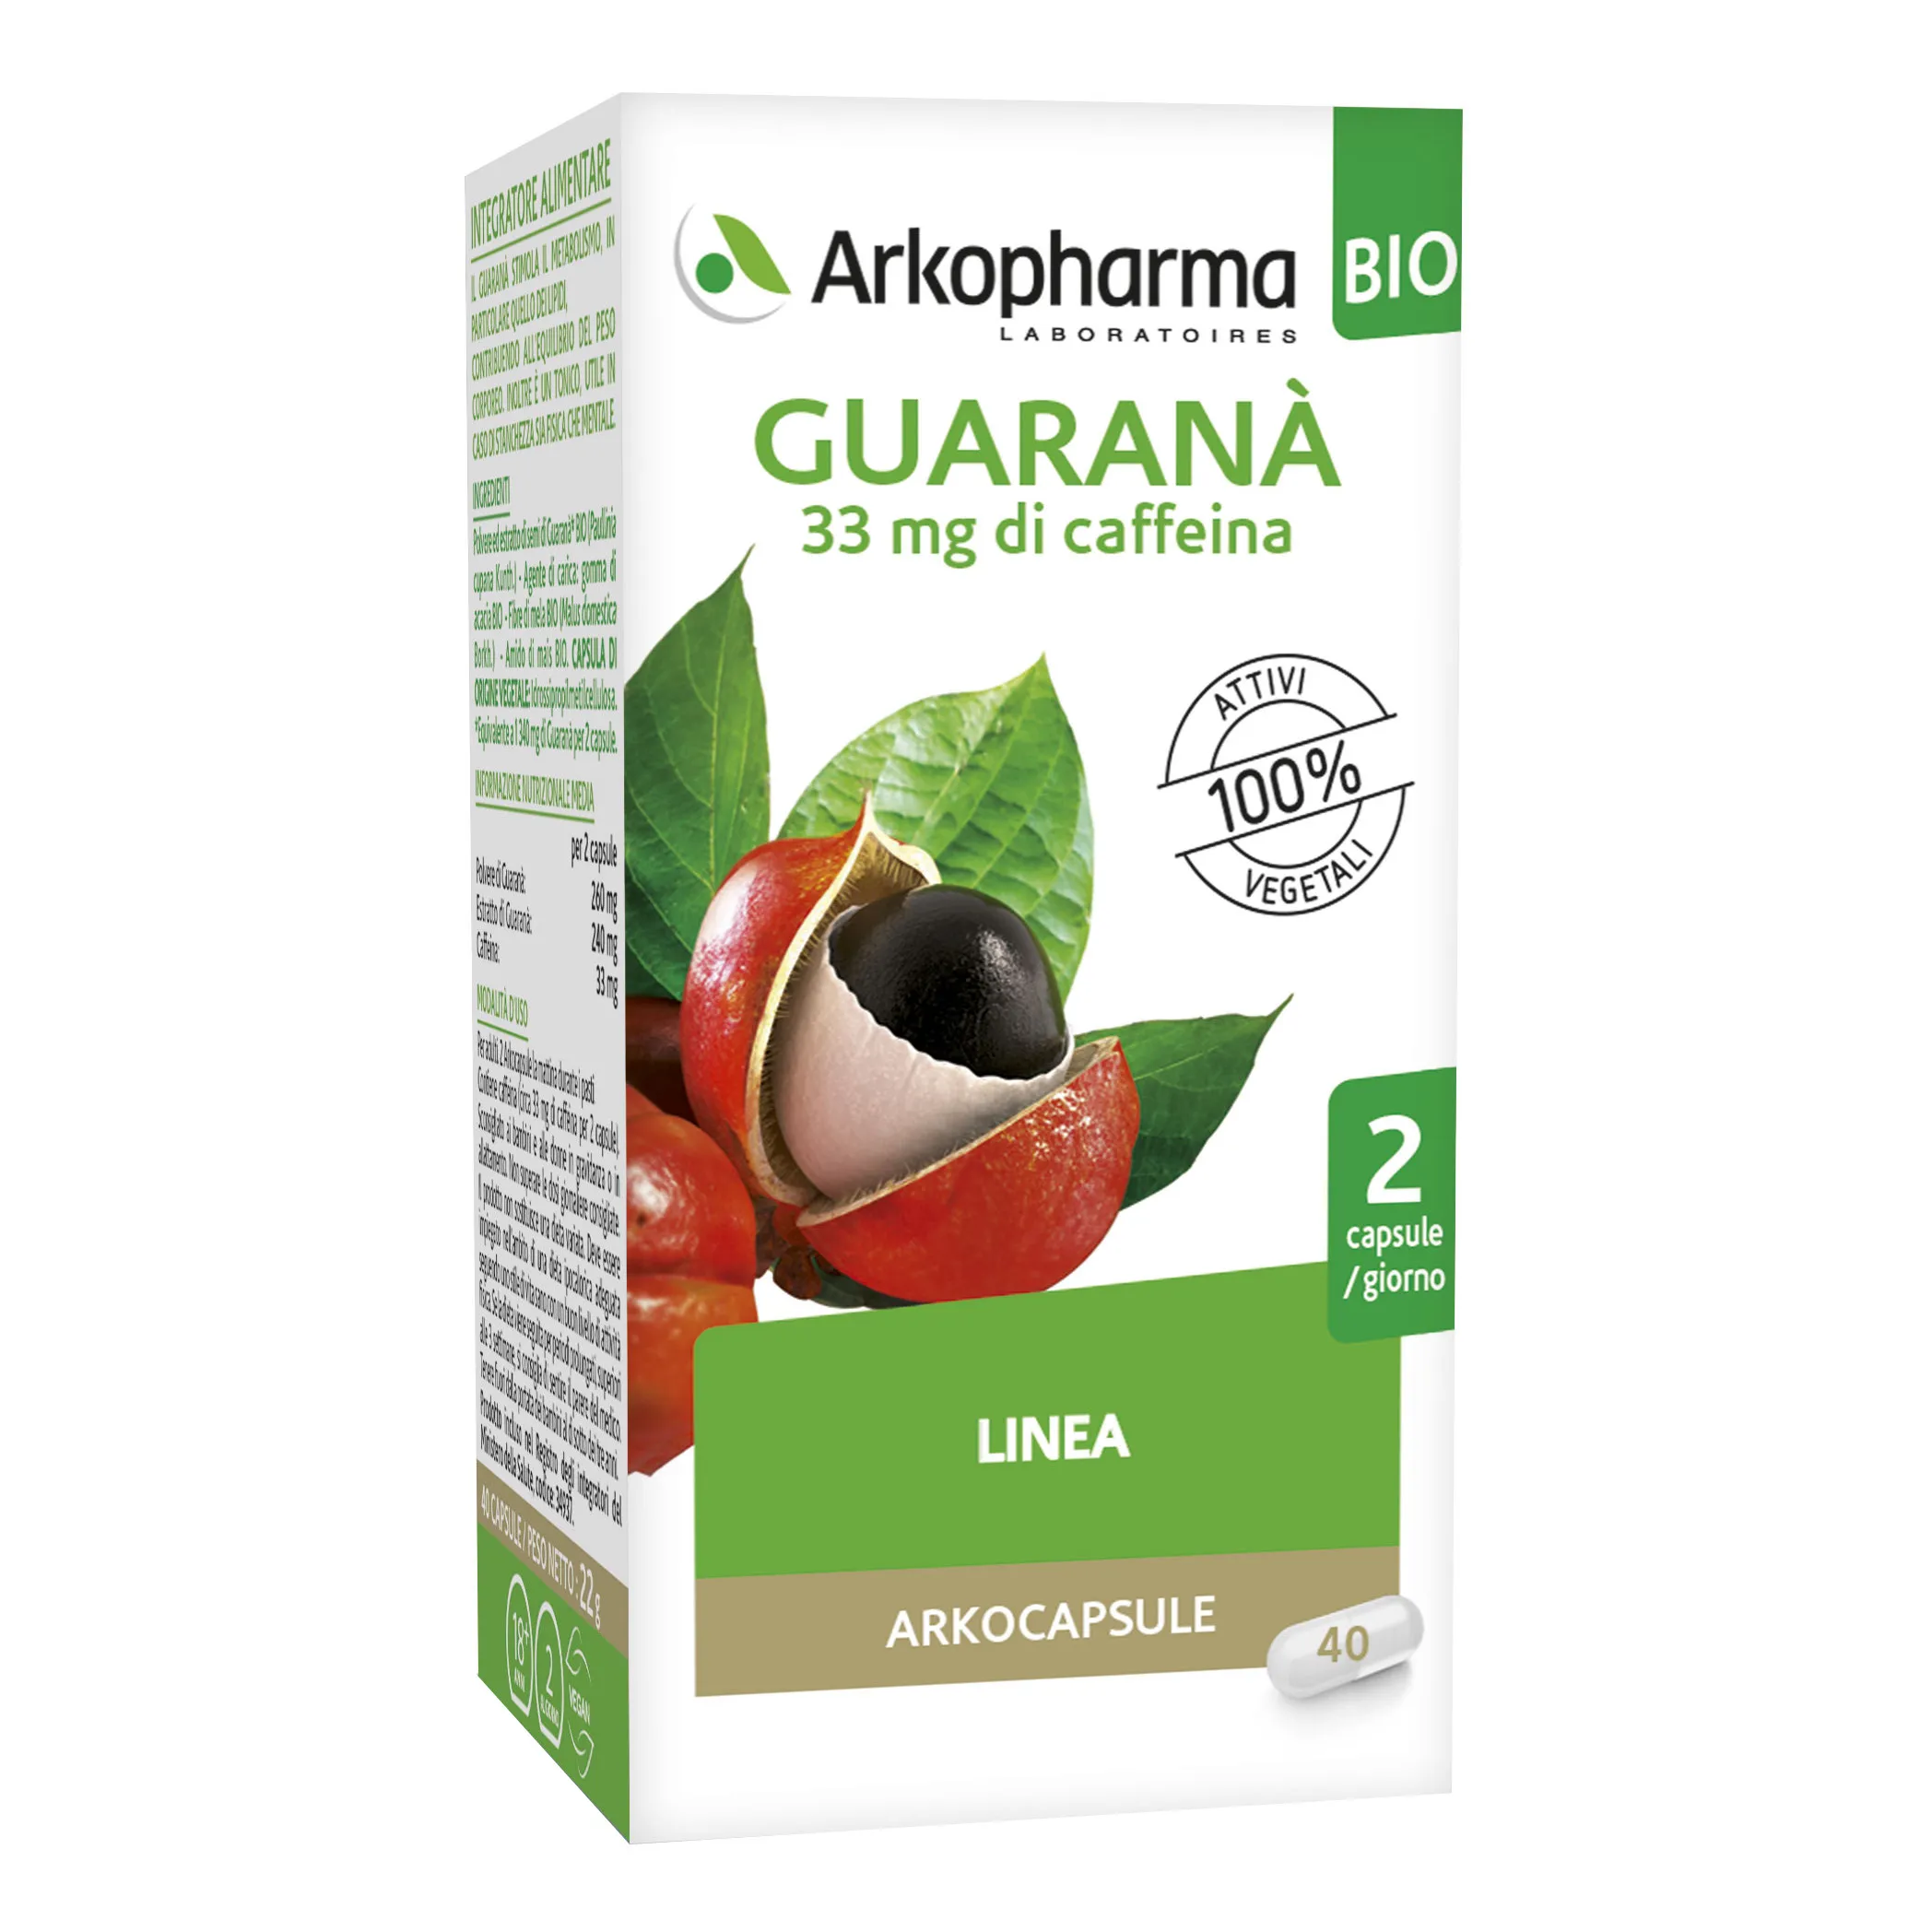 Arkopharma Guaranà Bio Integratore Linea 40 Arkocapsule